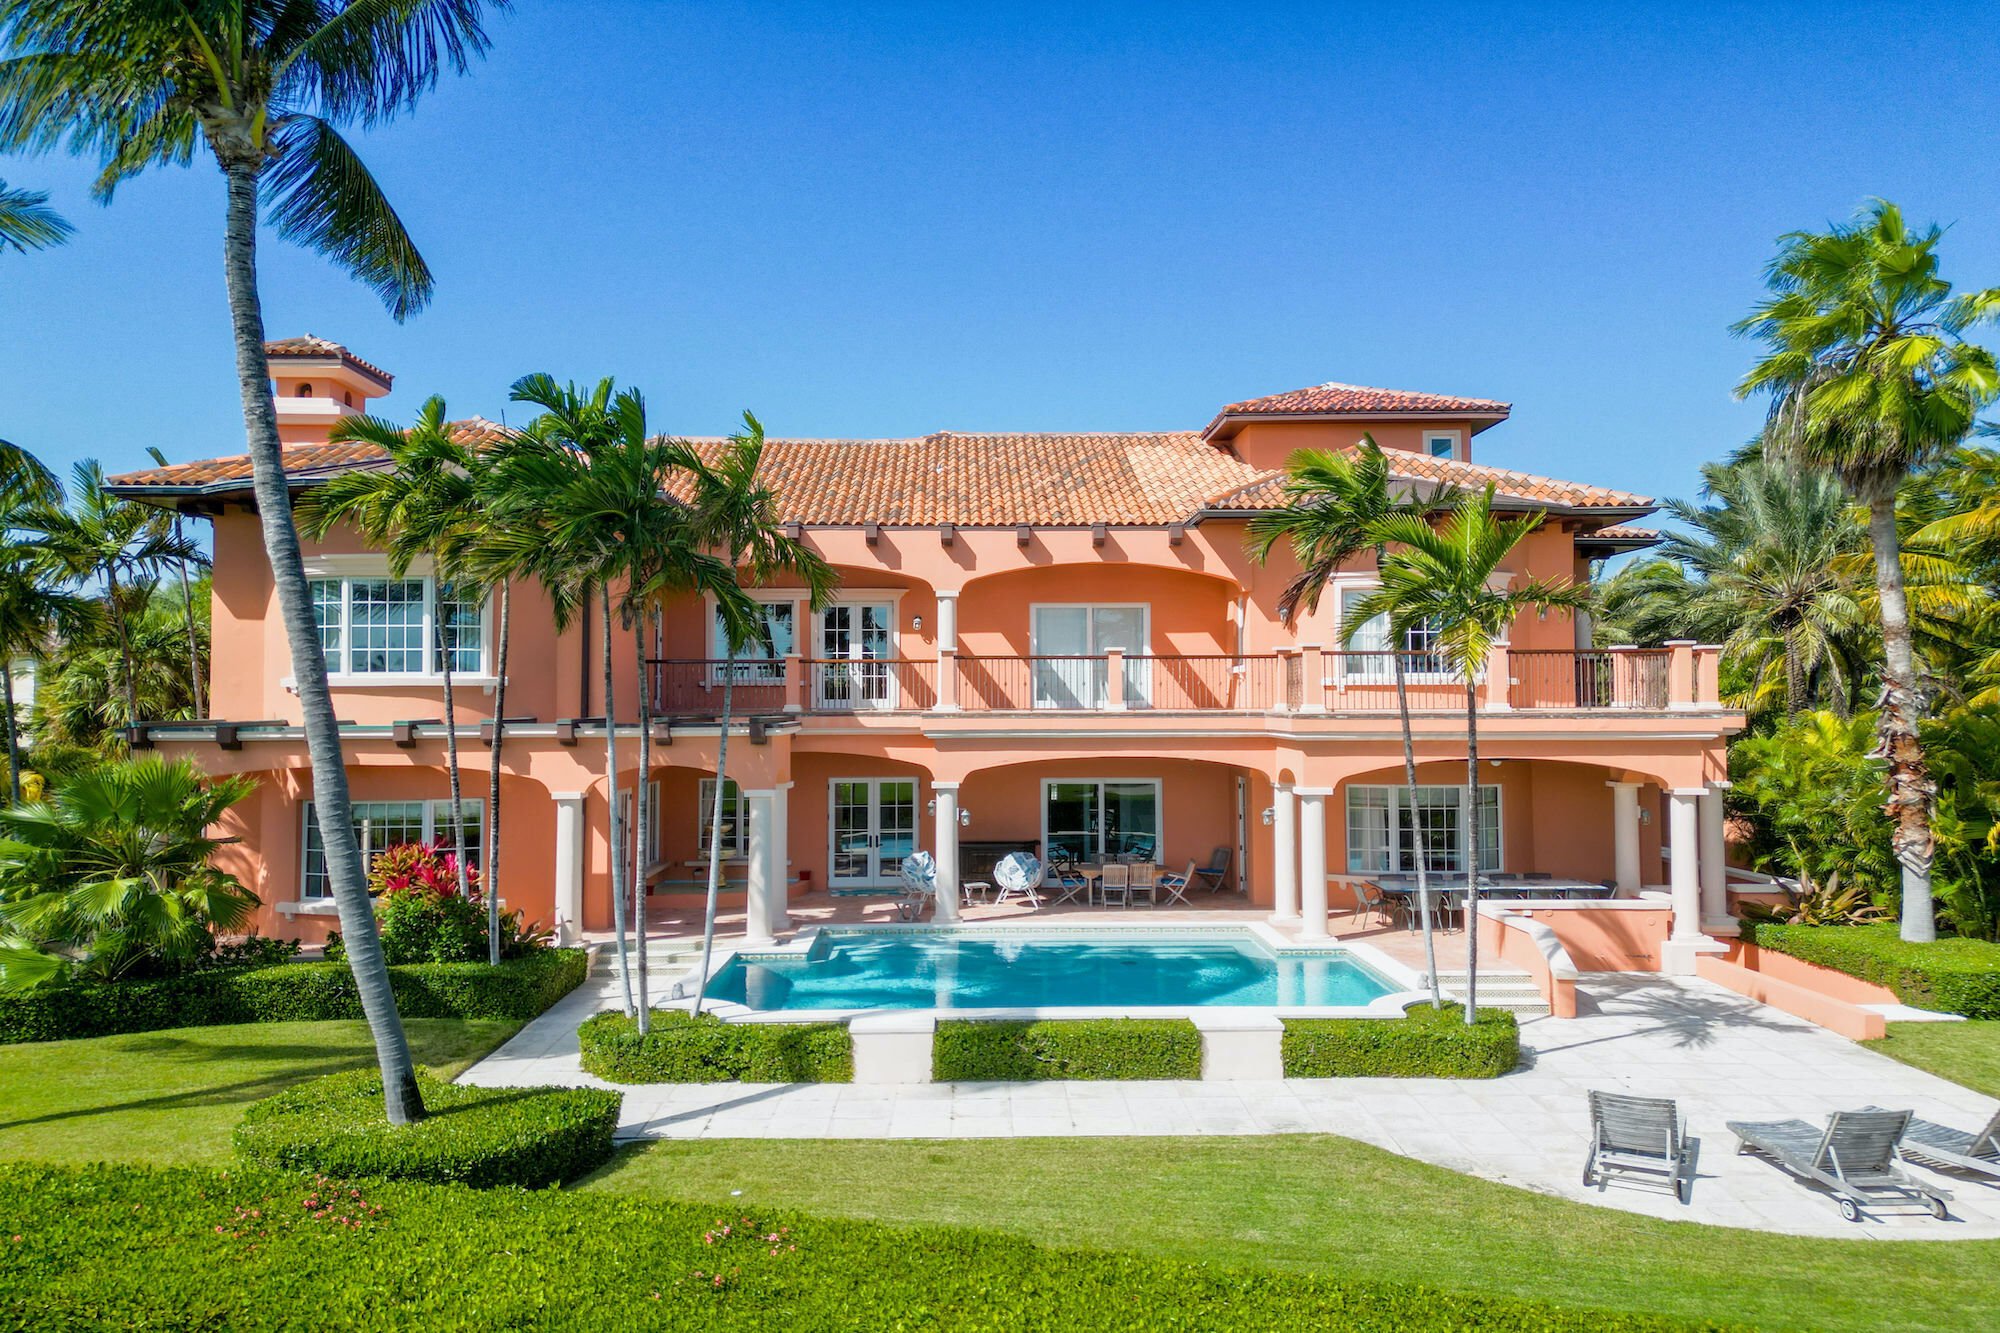 House in Nassau, New Providence, The Bahamas